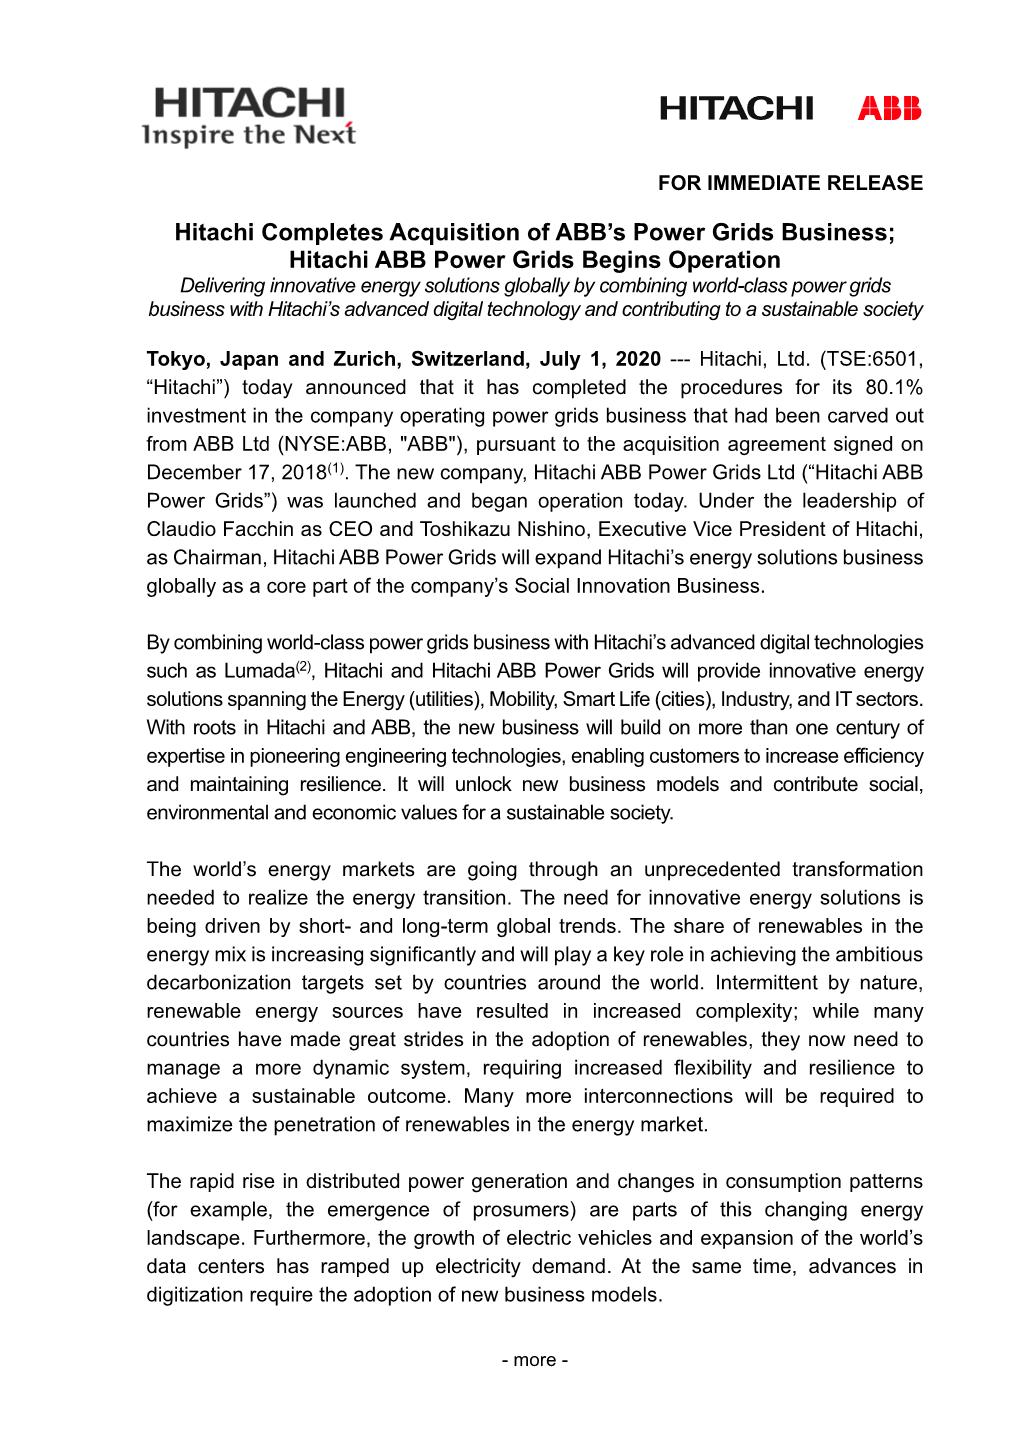 Hitachi ABB Power Grids Begins Operation